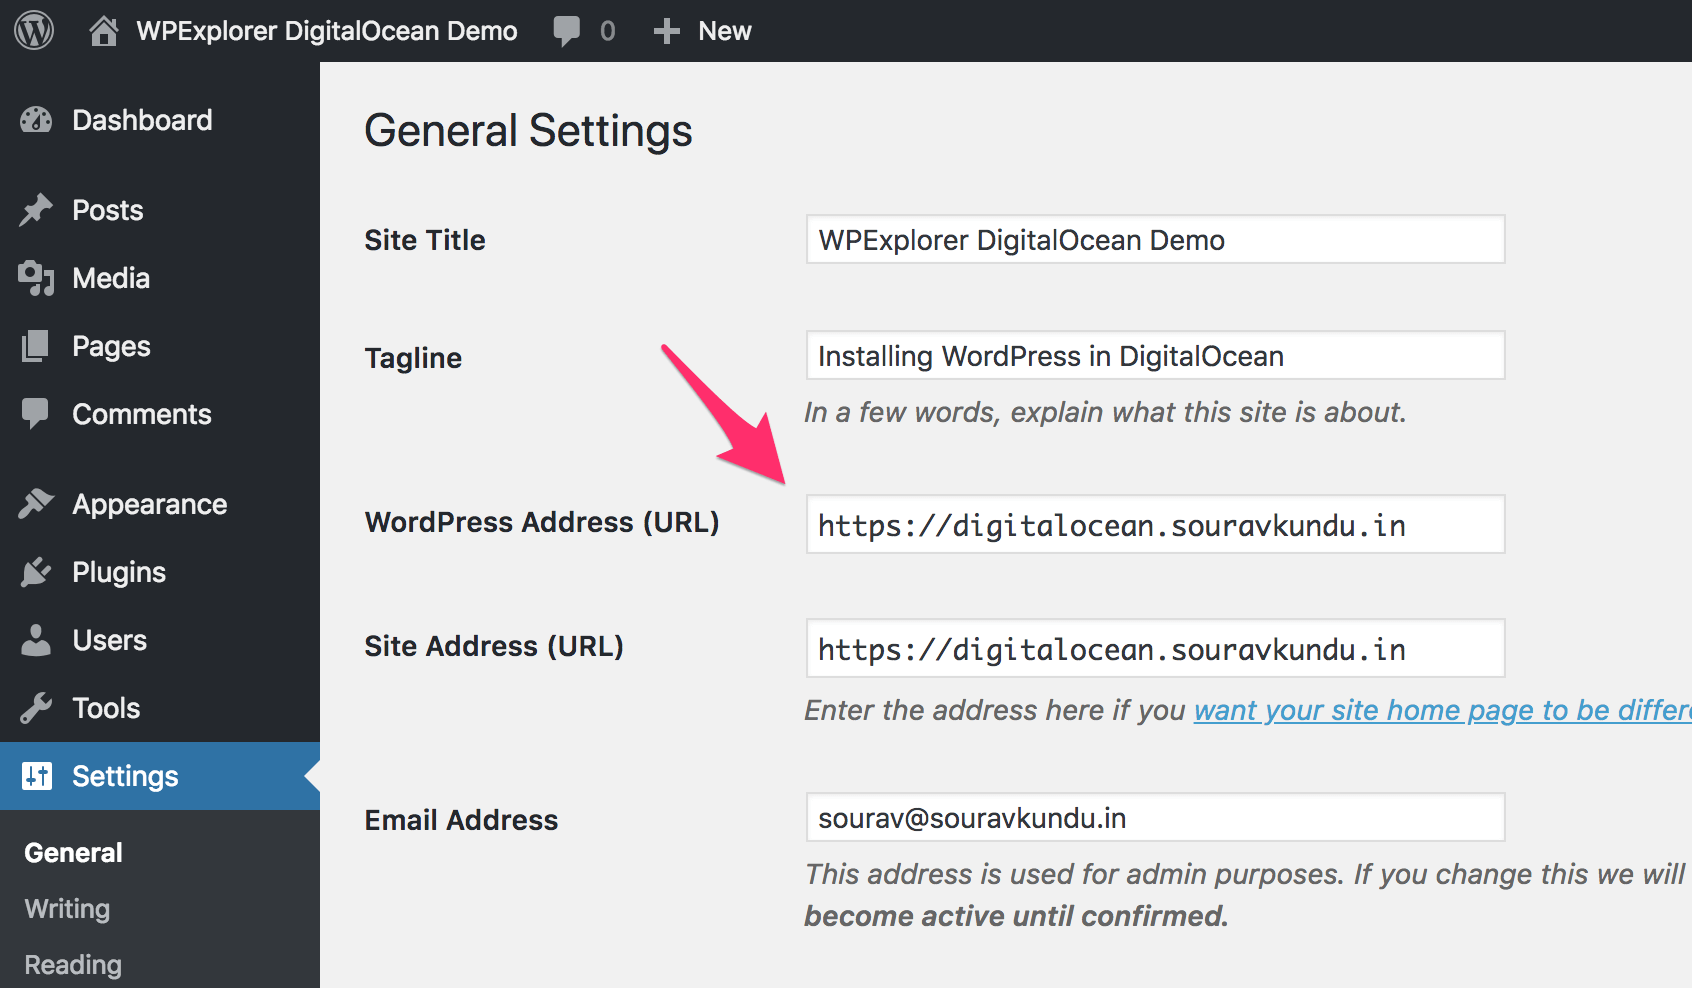 How to Install WordPress in DigitalOcean - WPExplorer